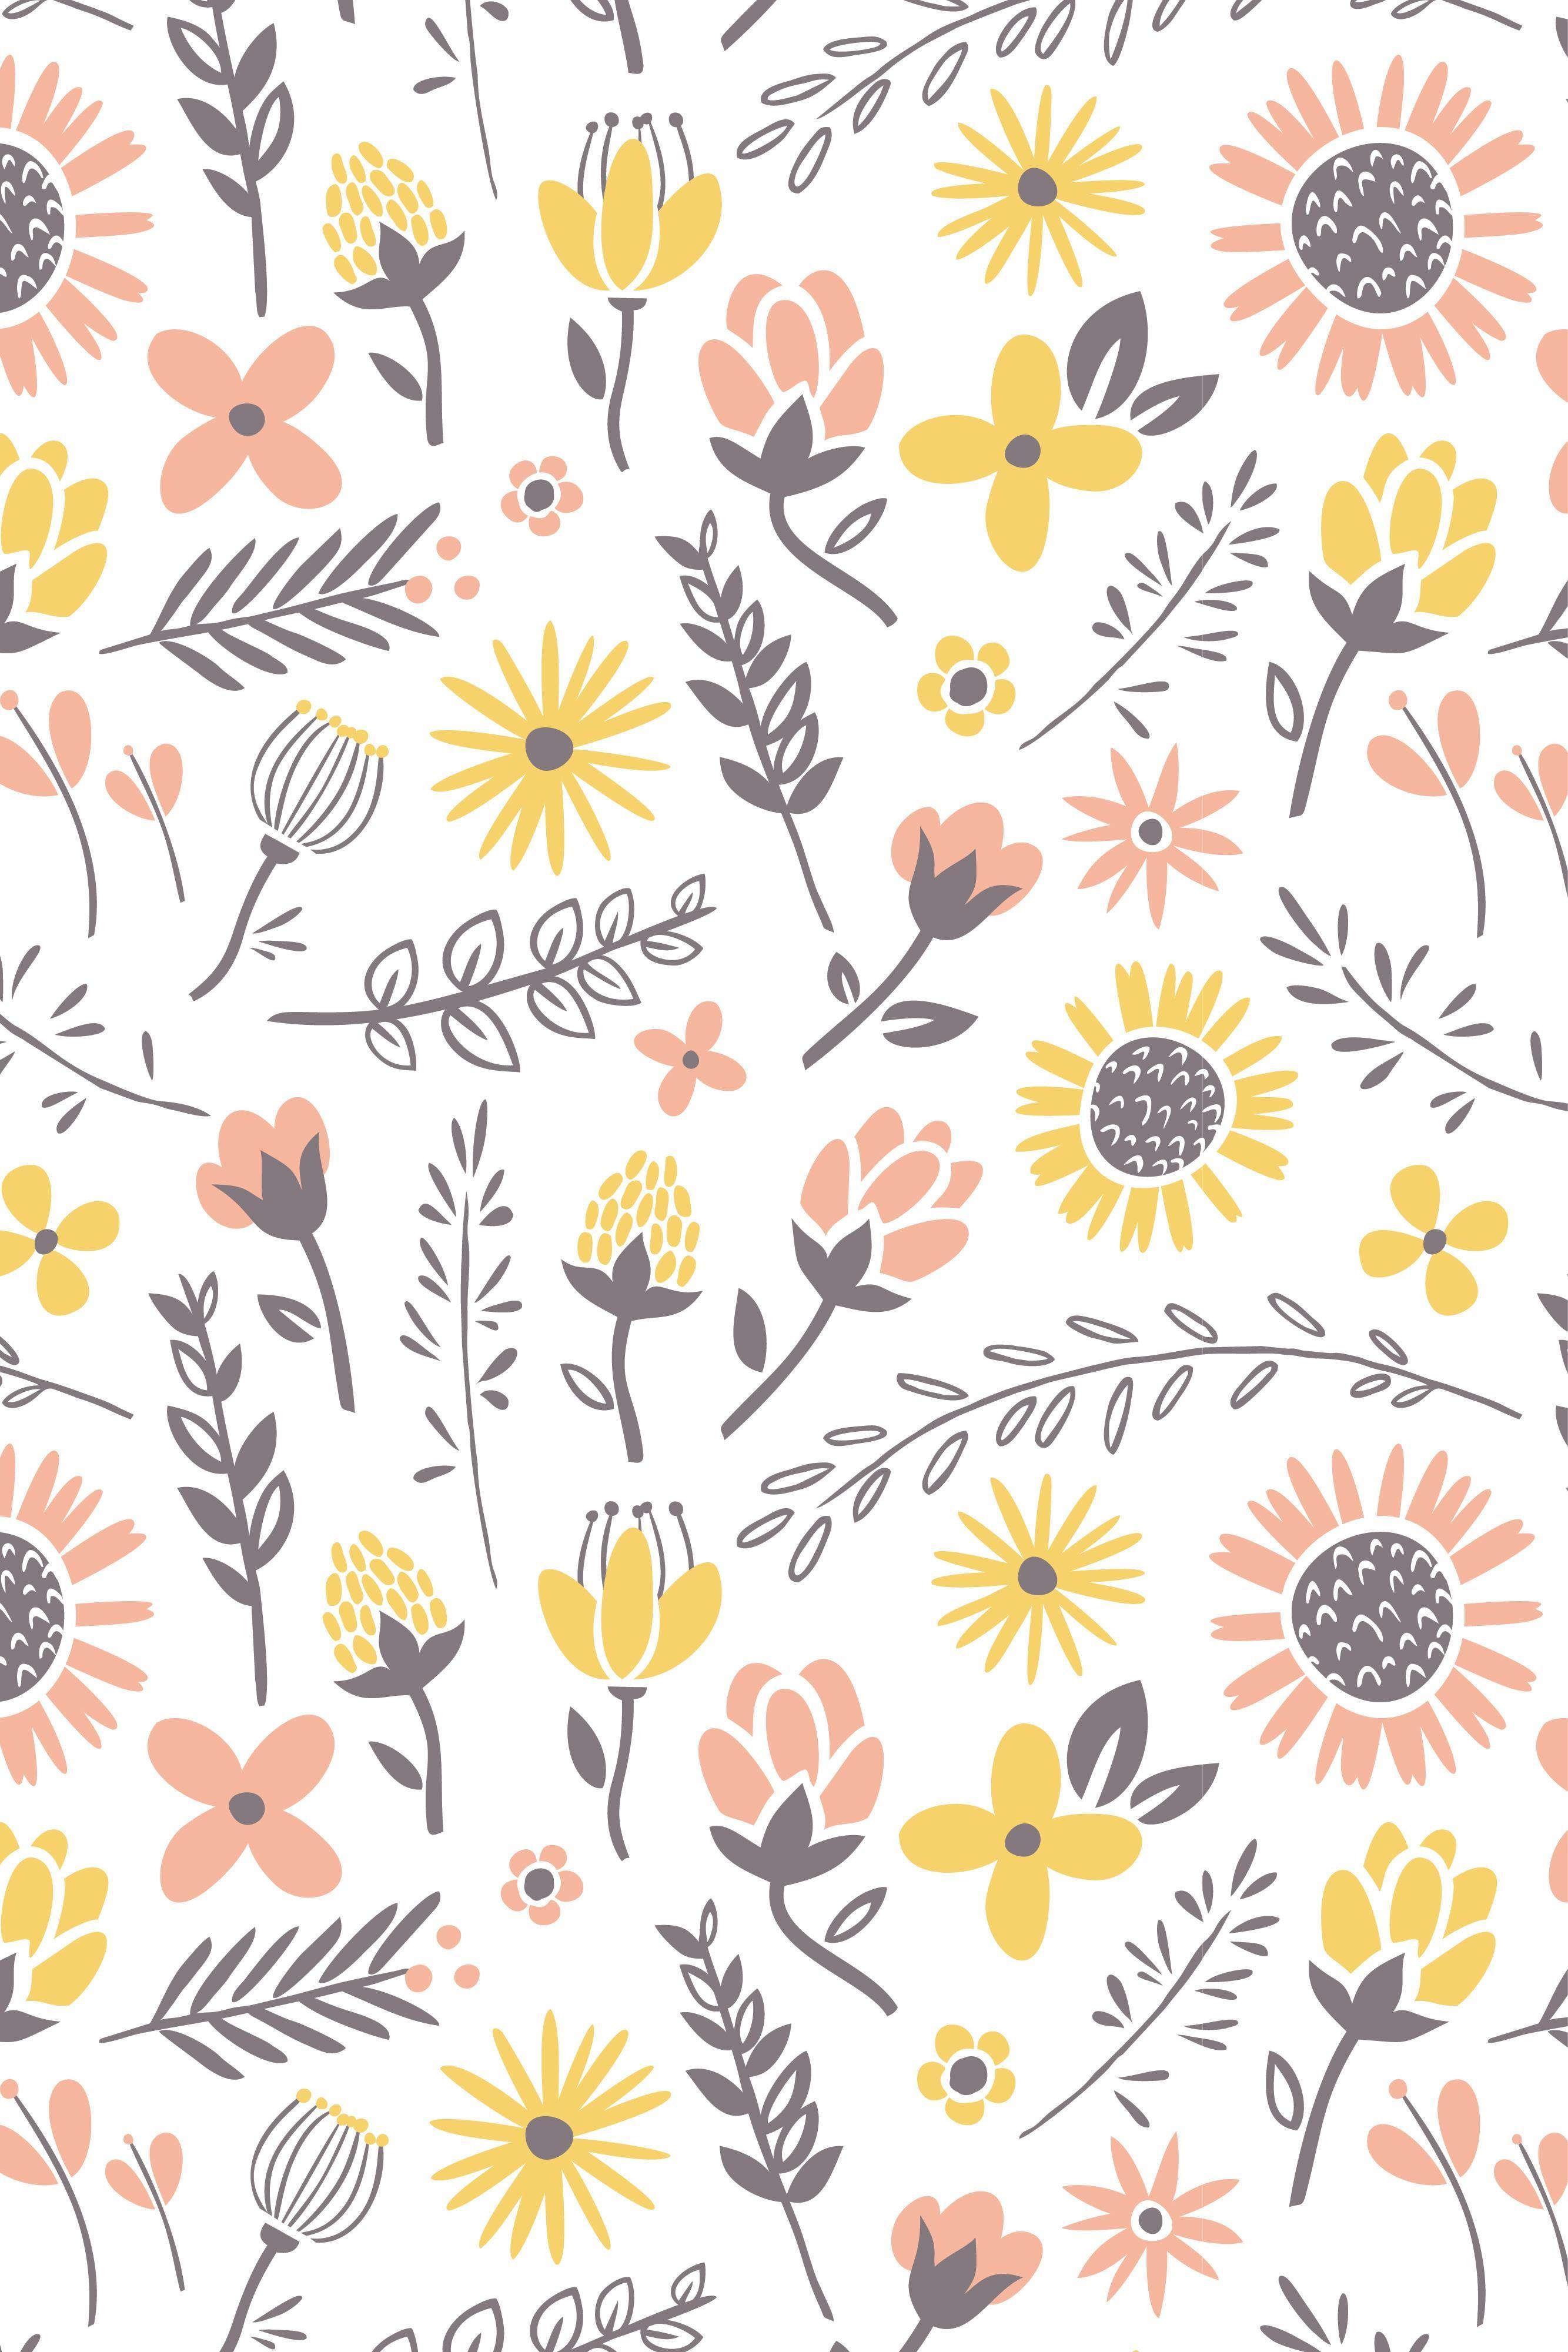 Flower iPhone Wallpaper Tumblr